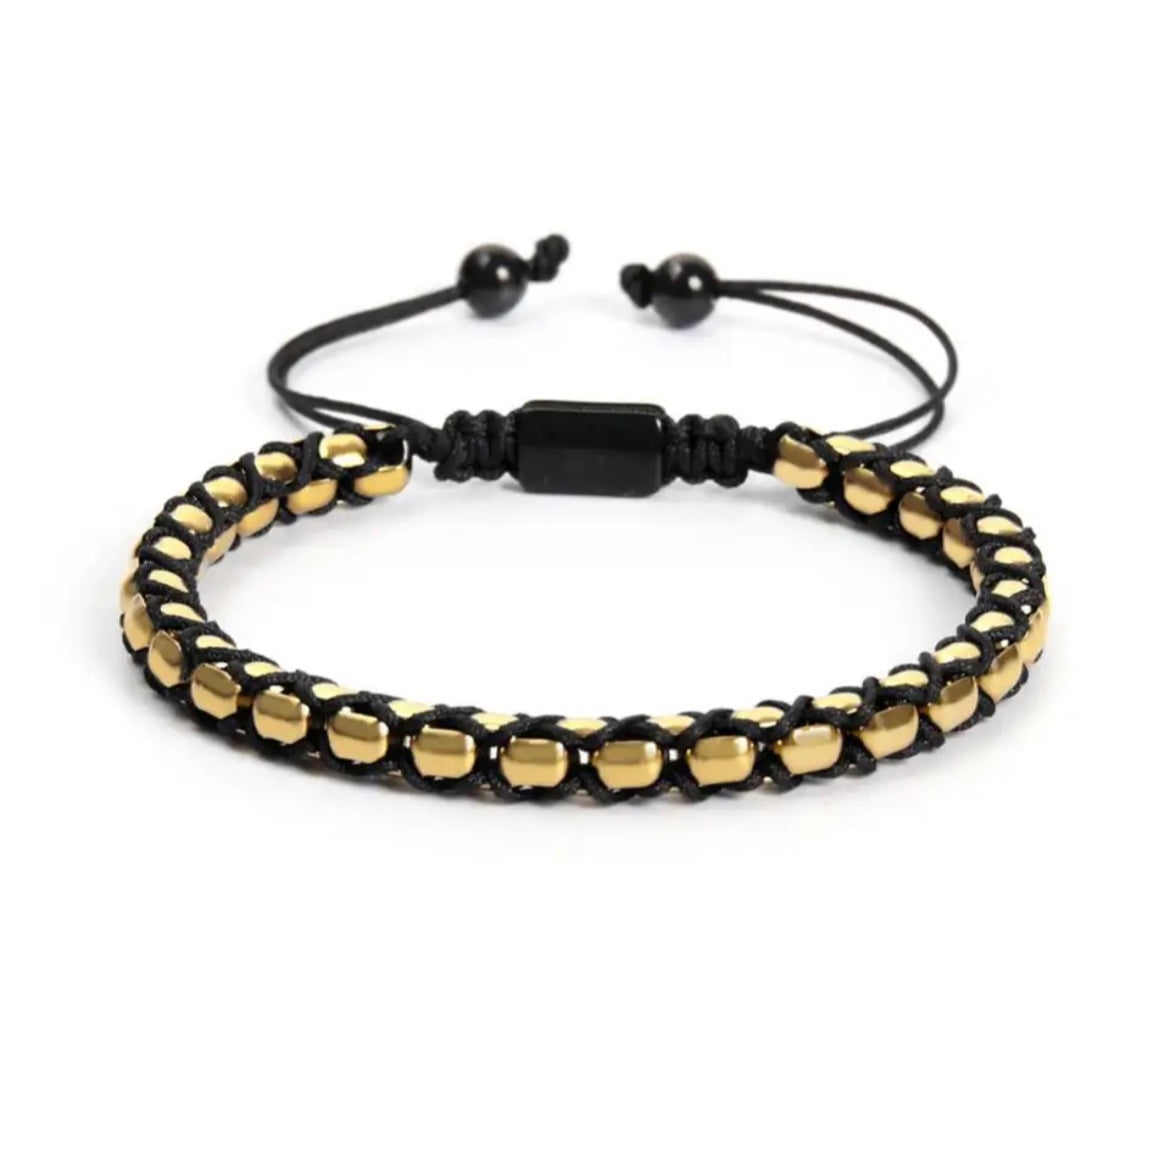 Gold Chain & Black String Braided Bracelet - My Harmony Tree